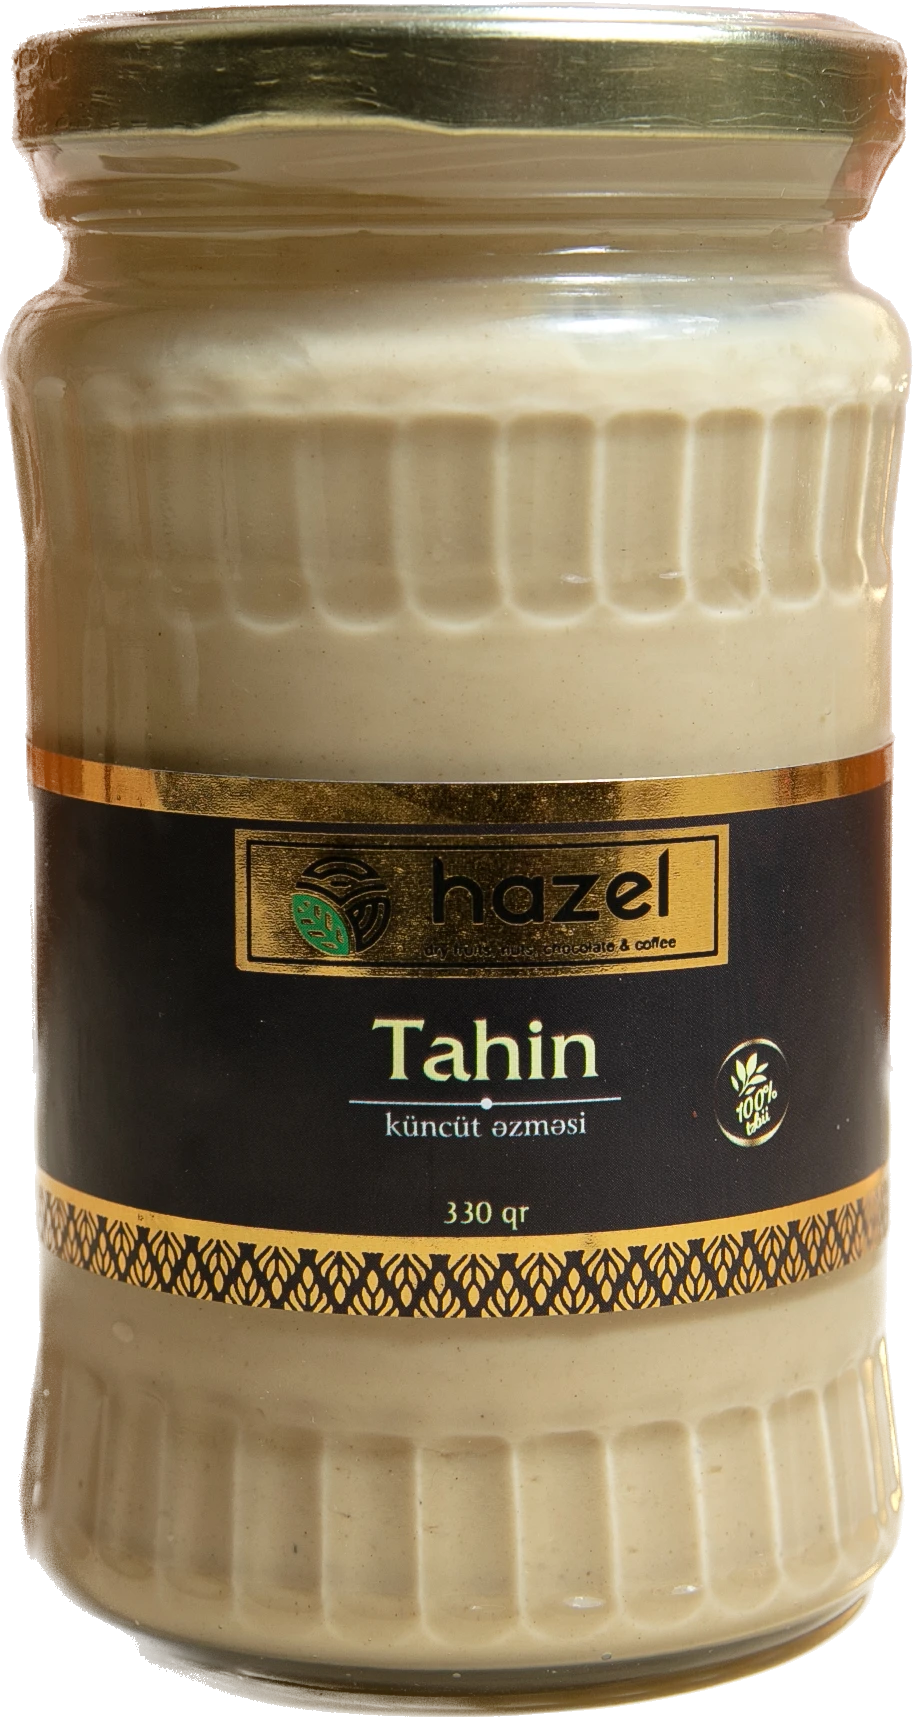 Tahin (370 qr)